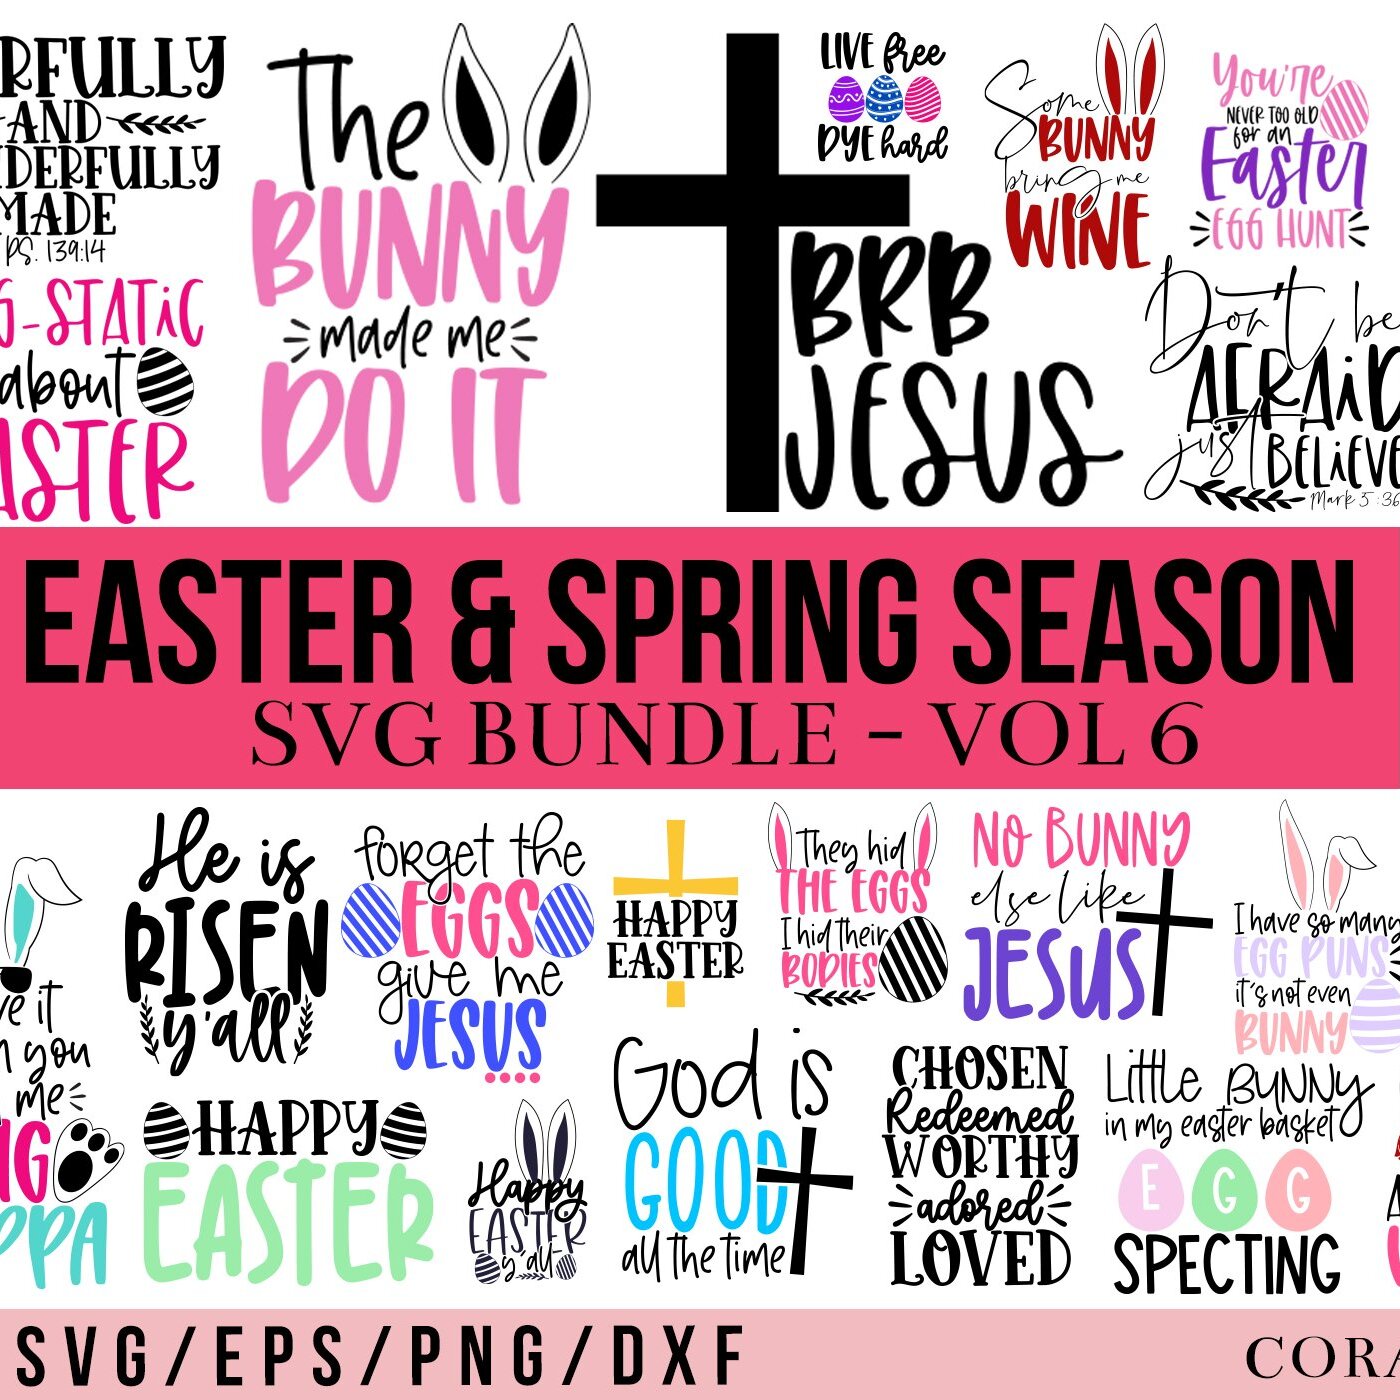 Easter and spring season svg bundle vol 6.